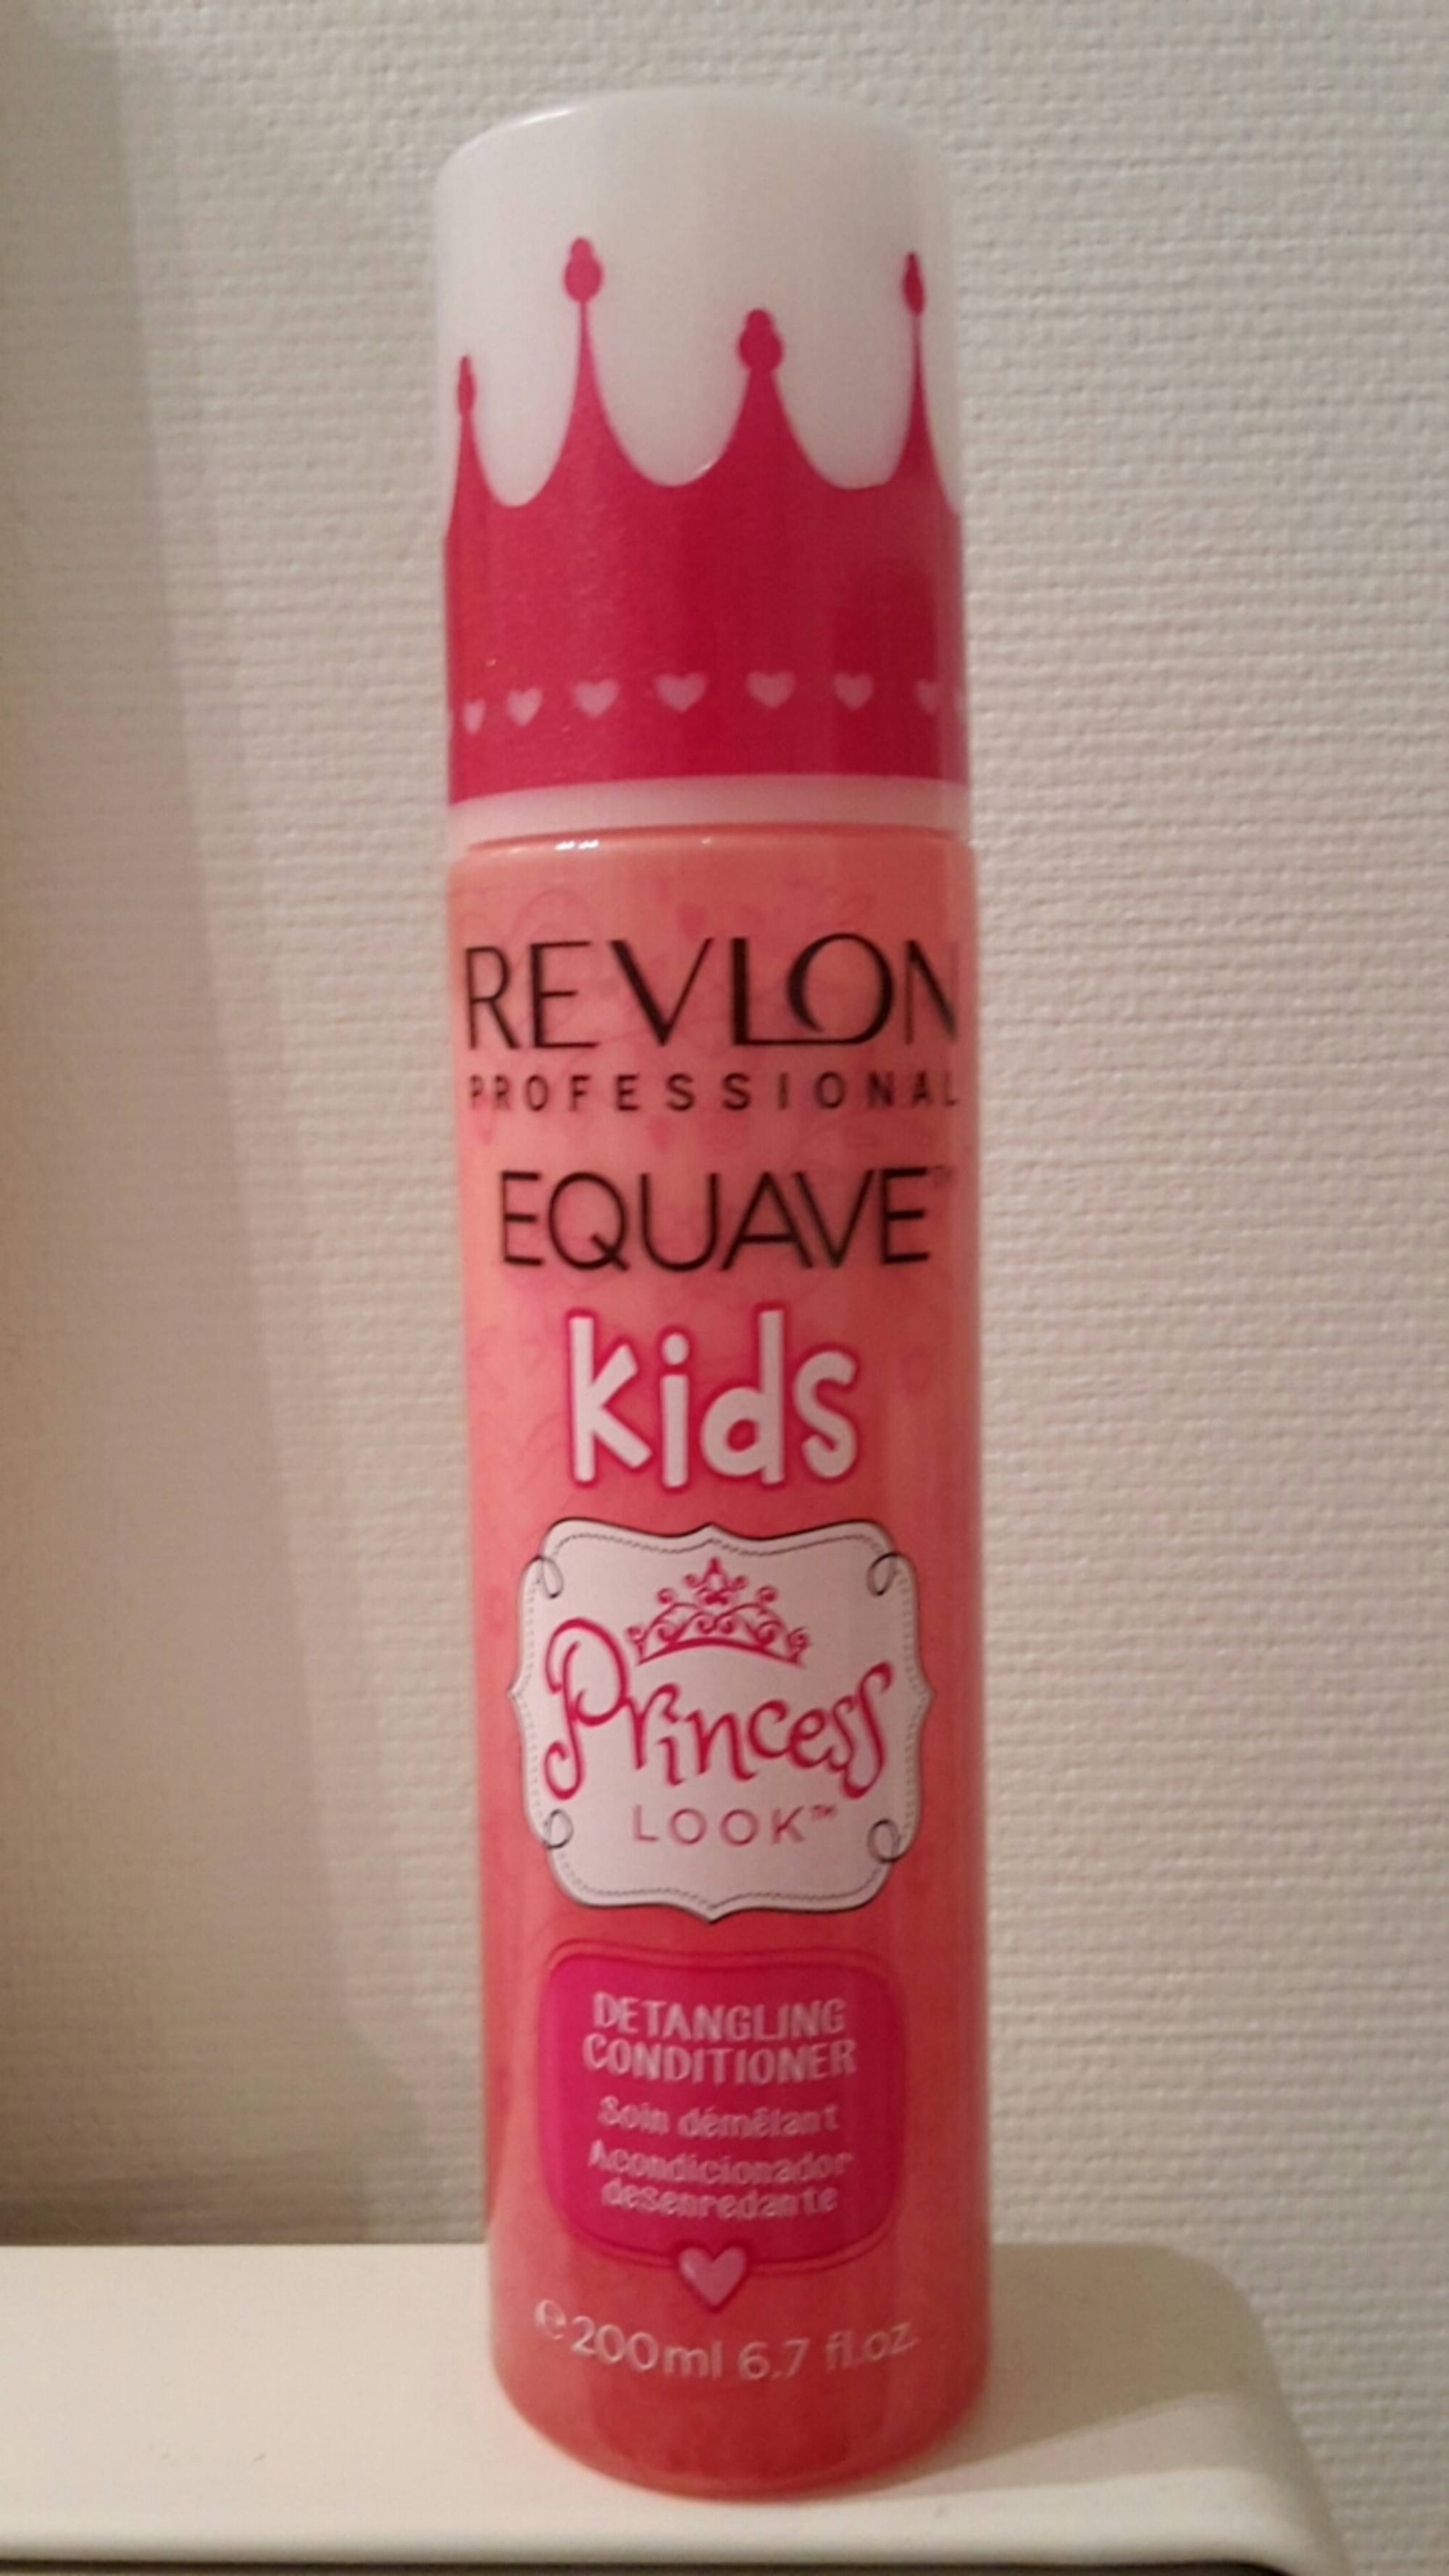 REVLON - Equave kids - Princess look soin démêlant